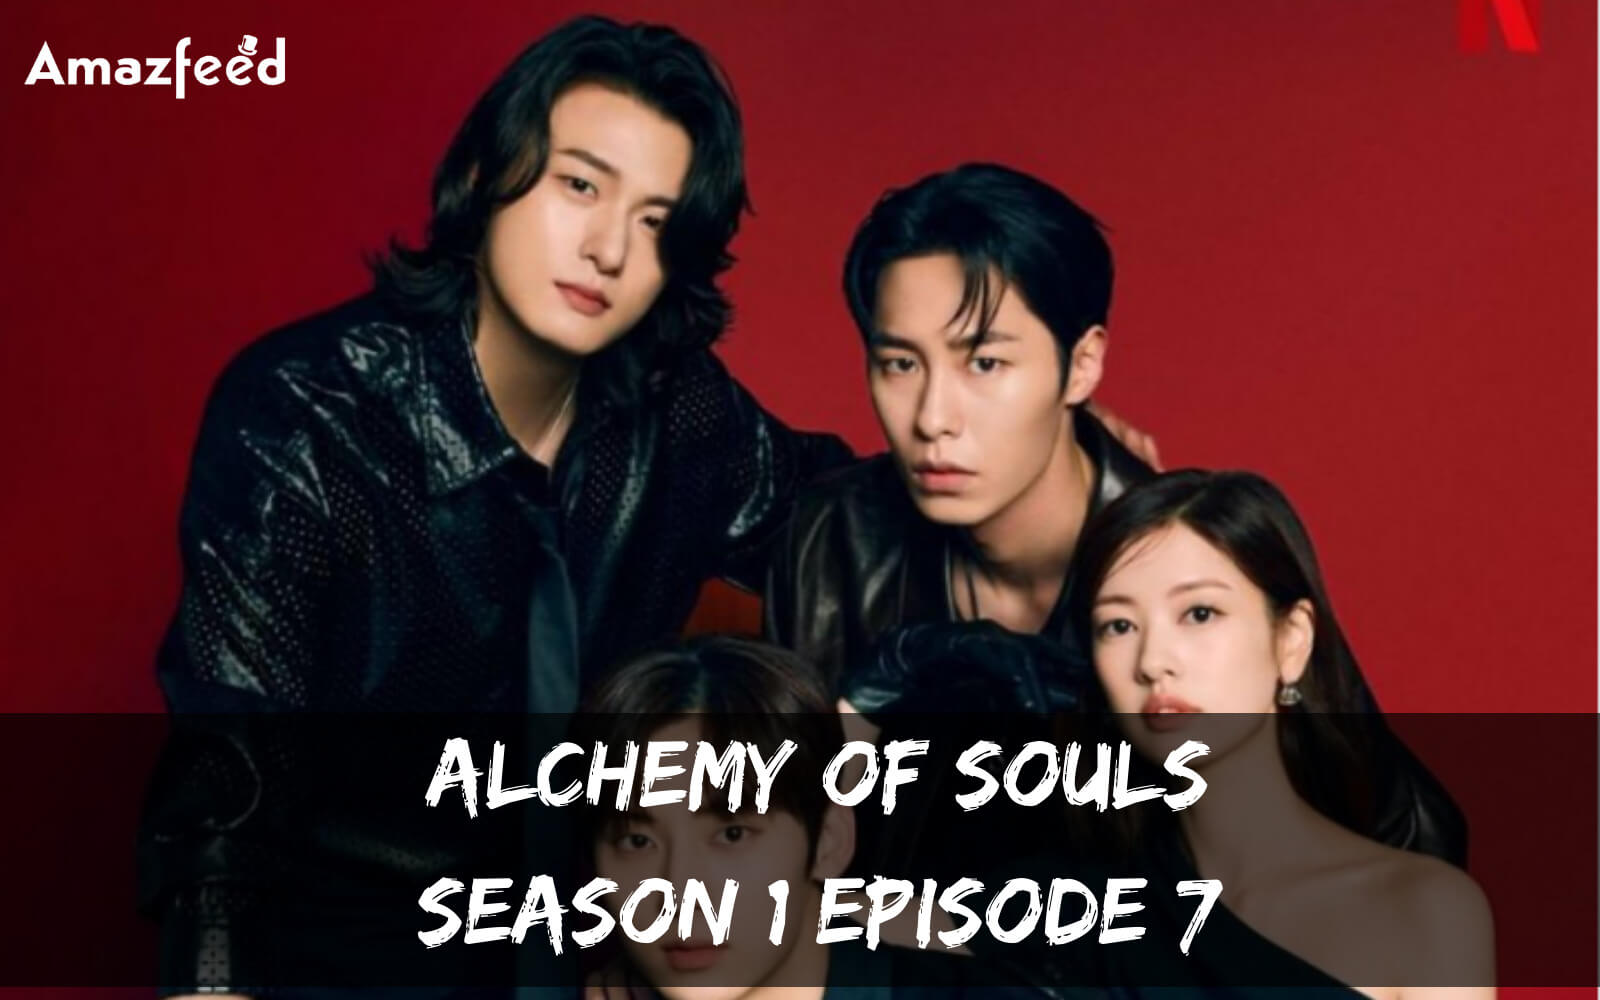 Alchemy of Souls. AMAZFEED. Alchemy of Souls Wallpaper. Soul seasons